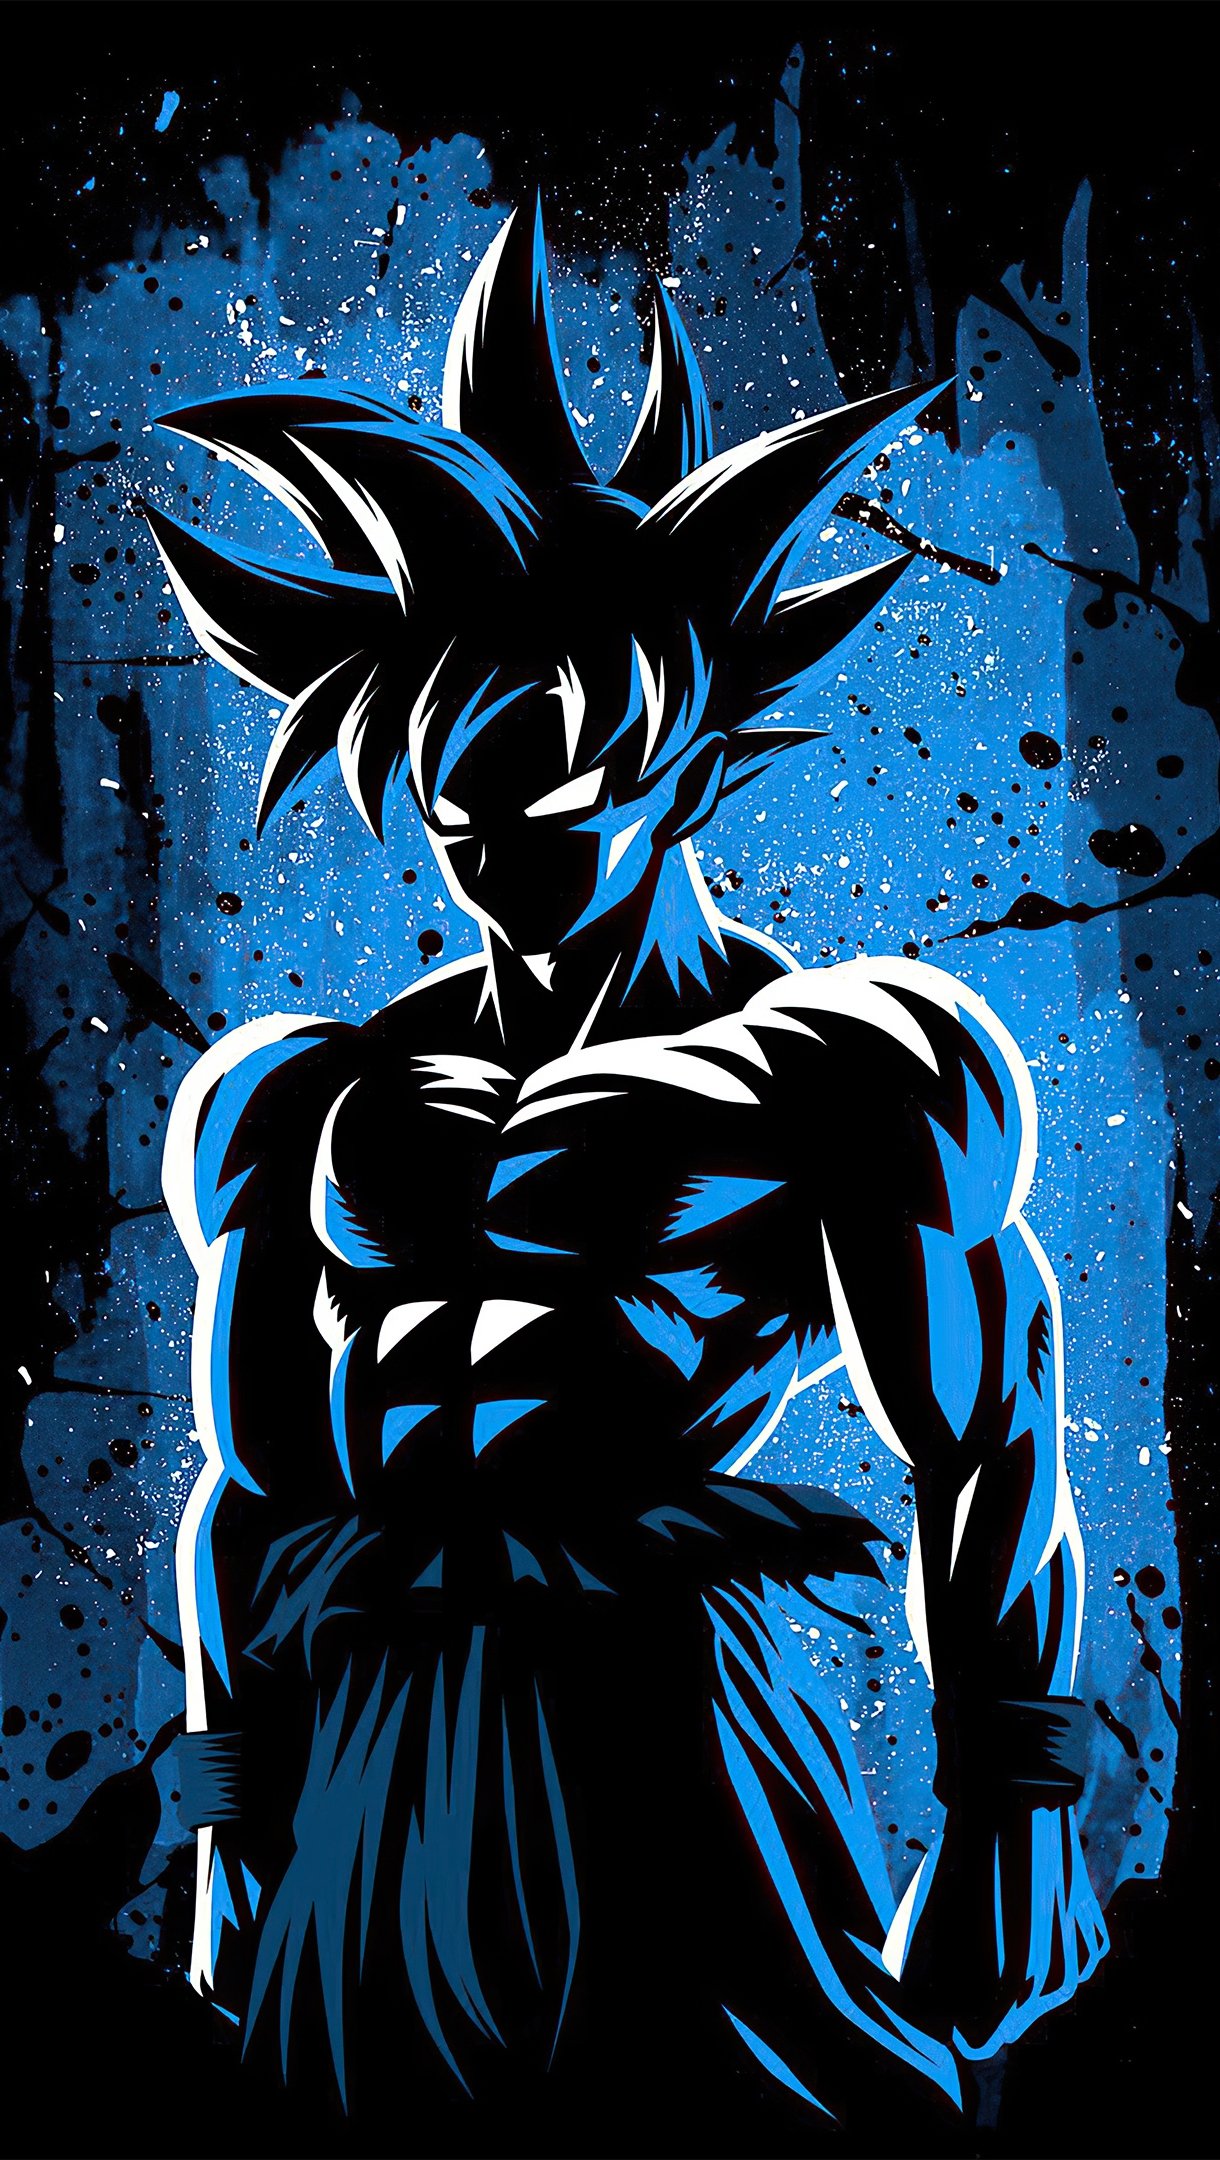 Goku Minimalist style 2020 Anime Wallpaper 4k Ultra HD ID6162